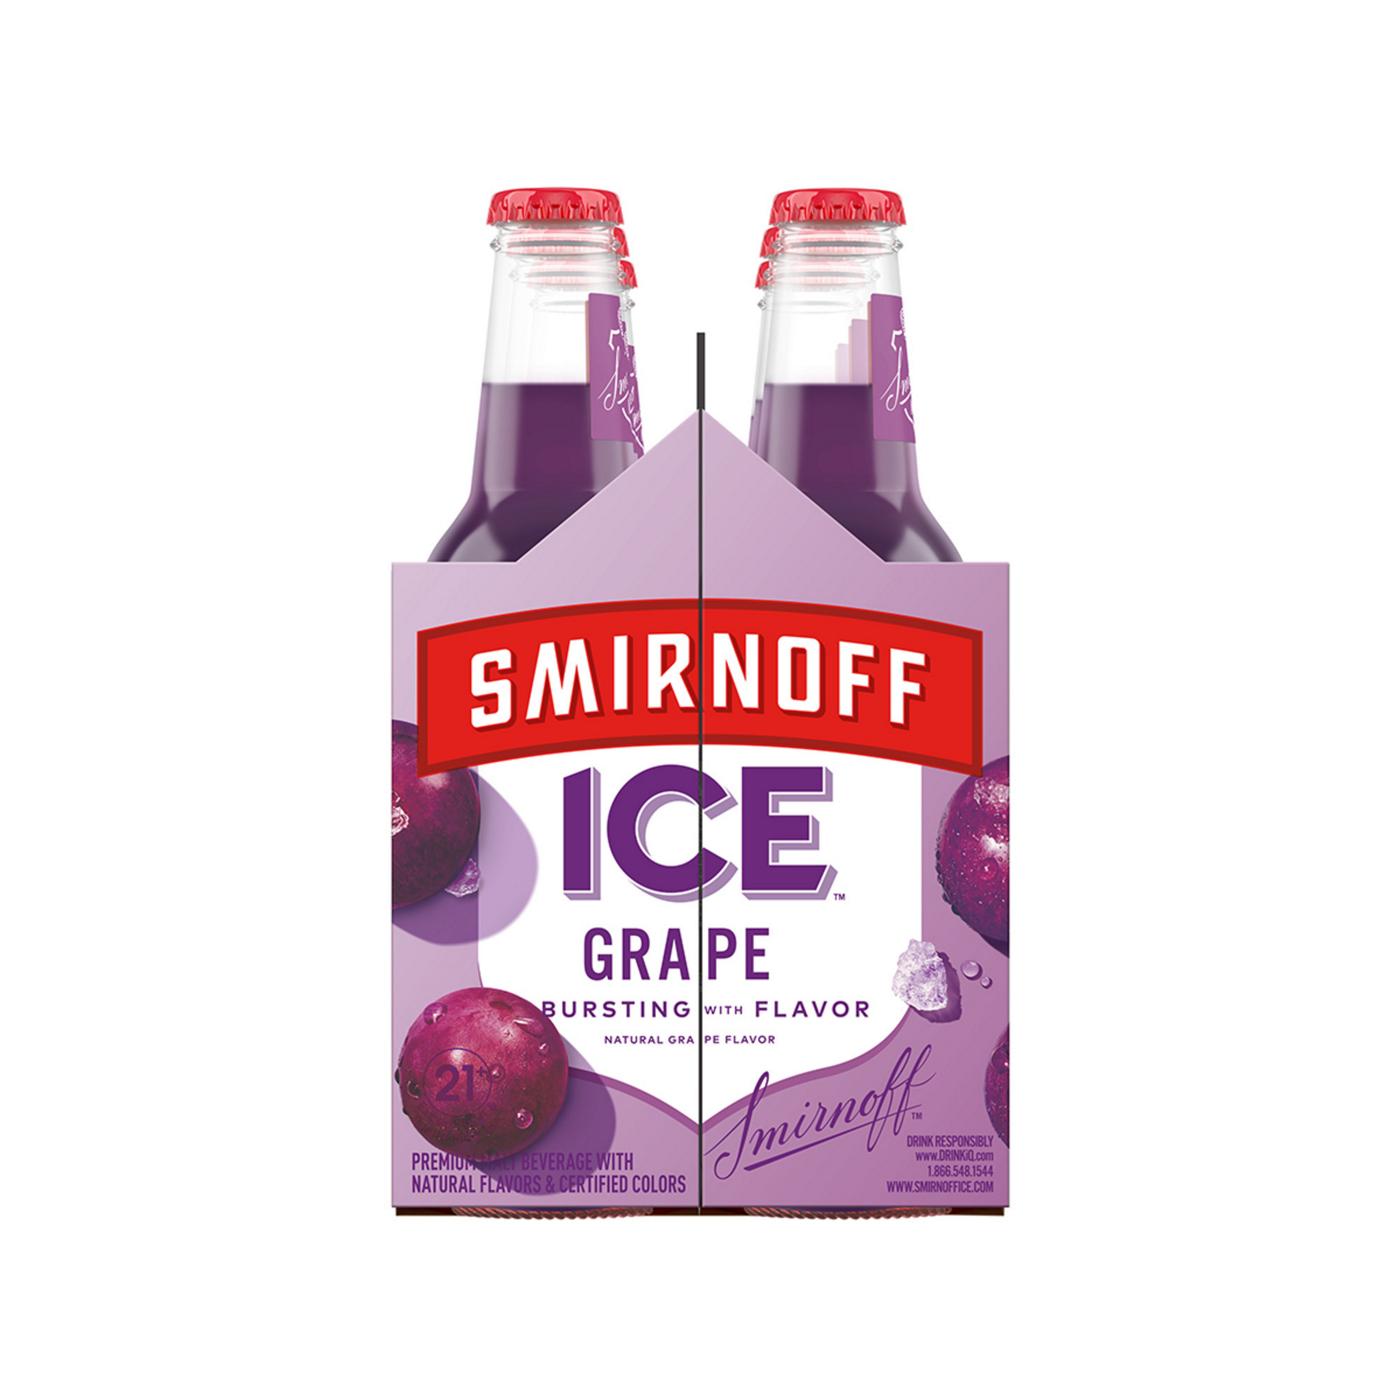 Smirnoff Ice Grape; image 3 of 3